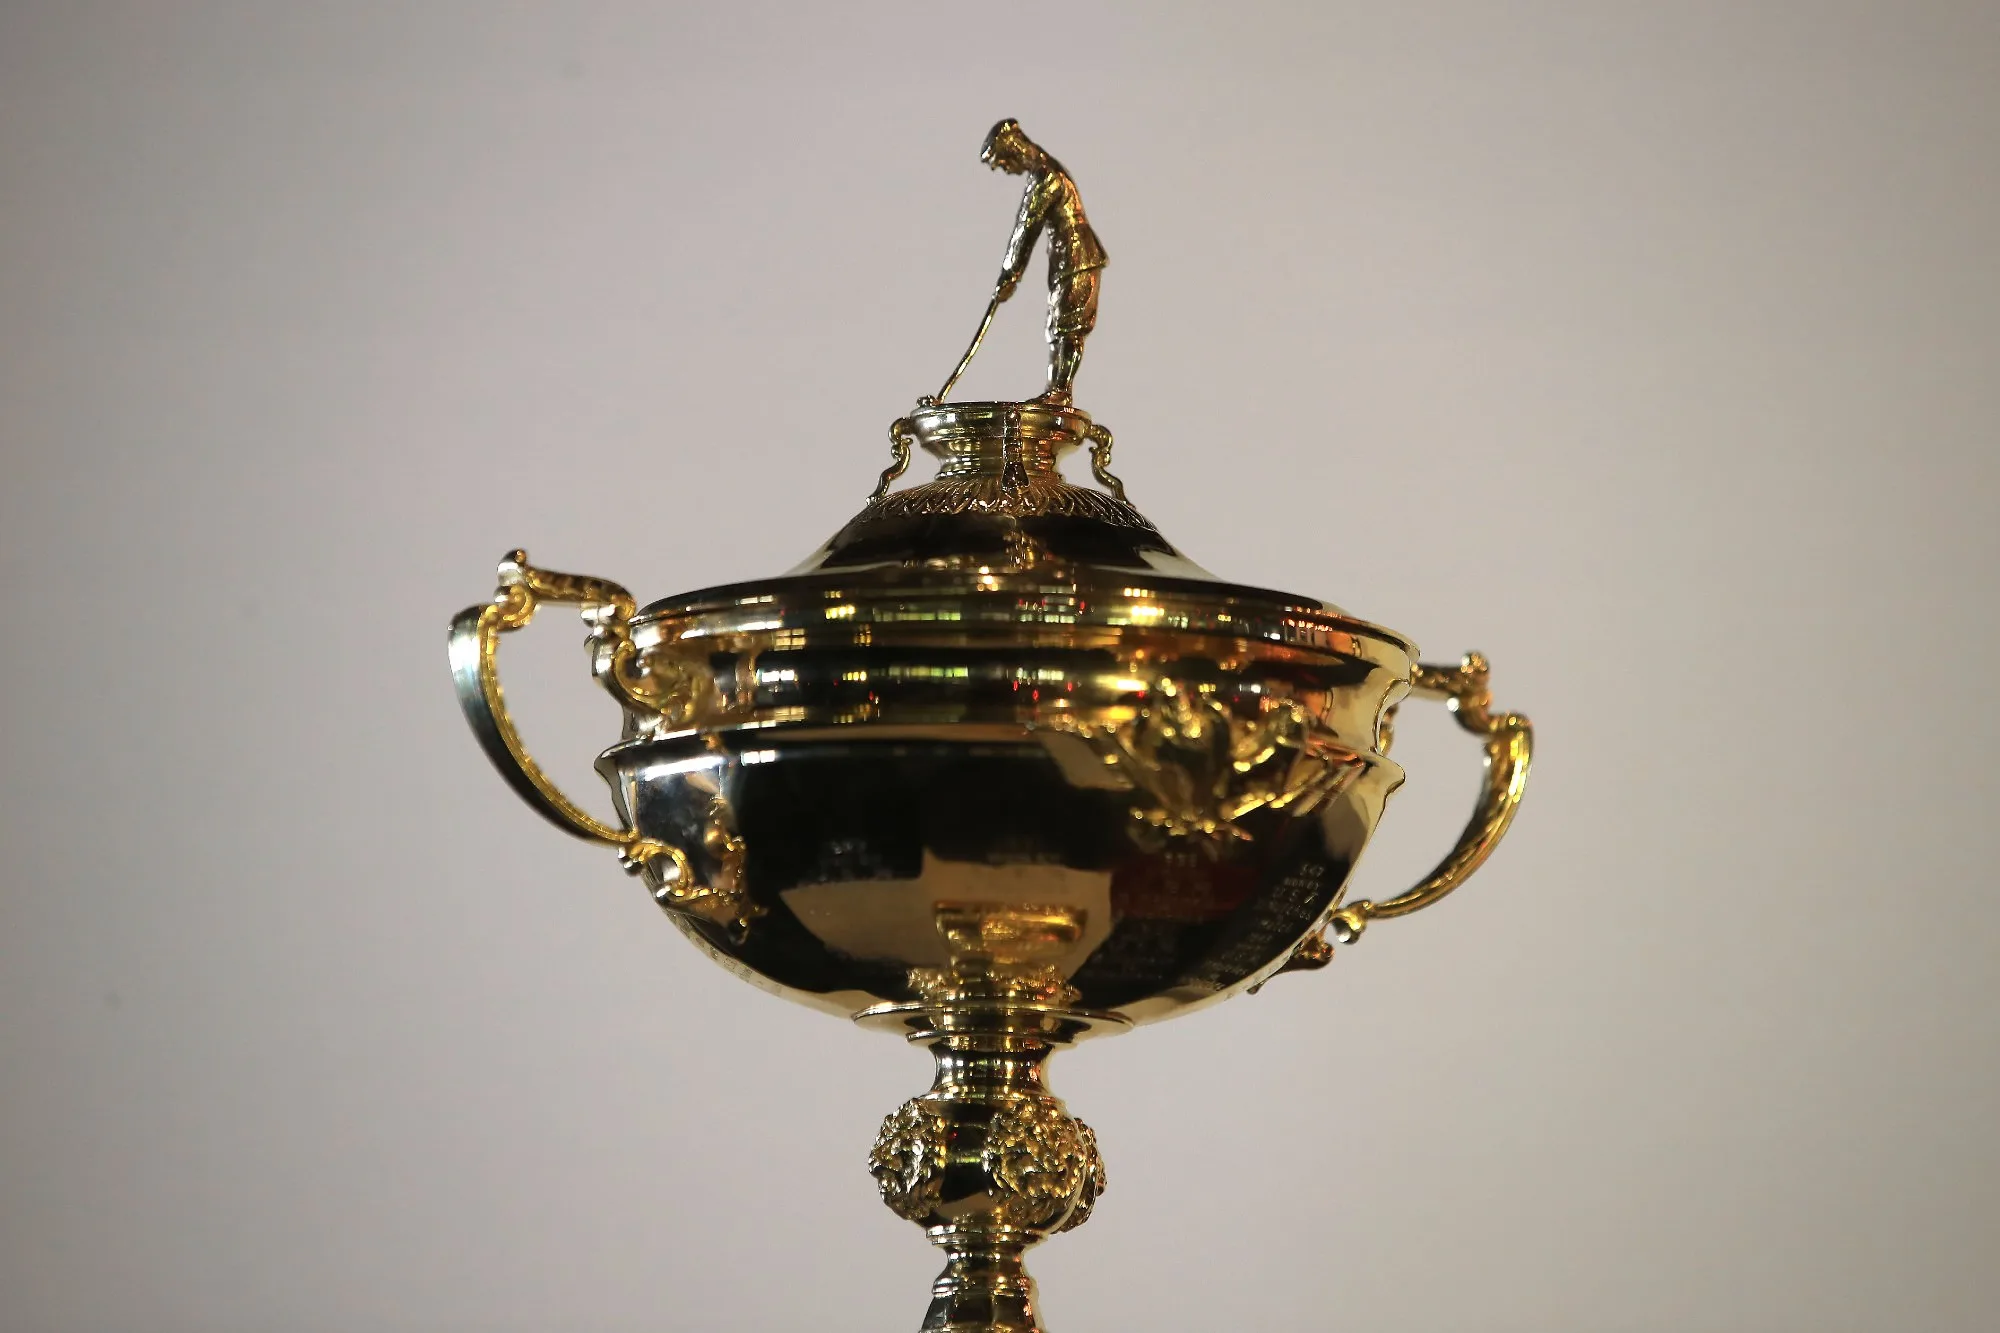 Ryder Cup trophy